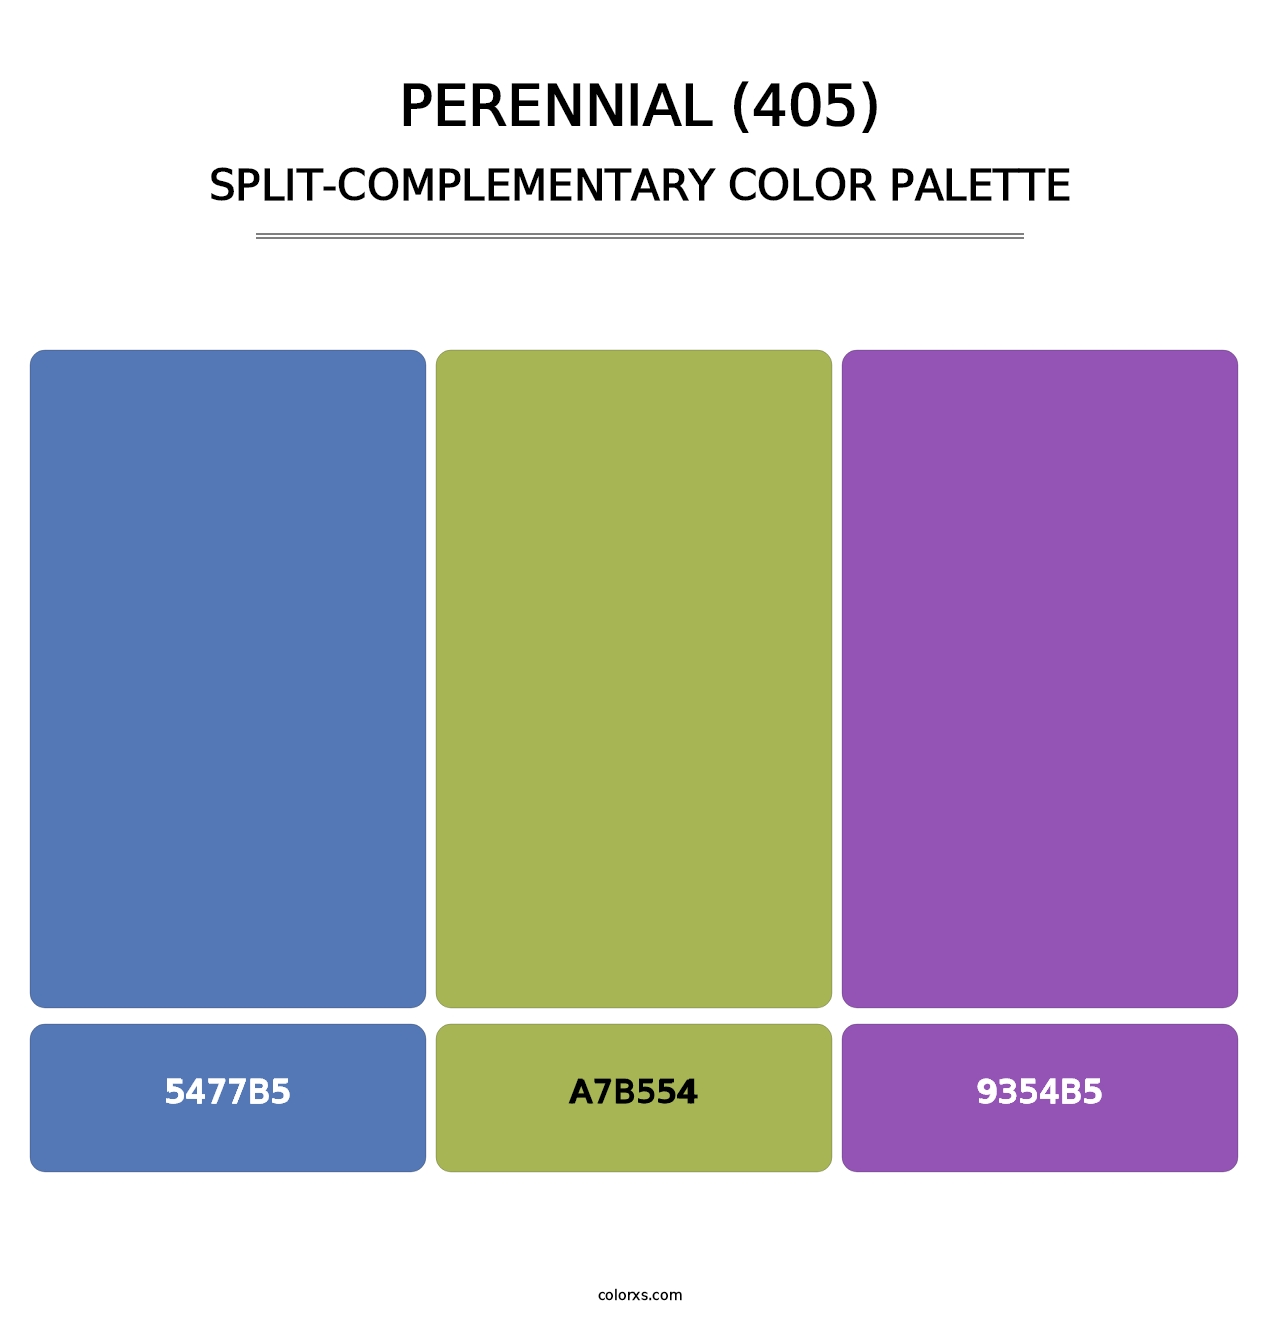 Perennial (405) - Split-Complementary Color Palette